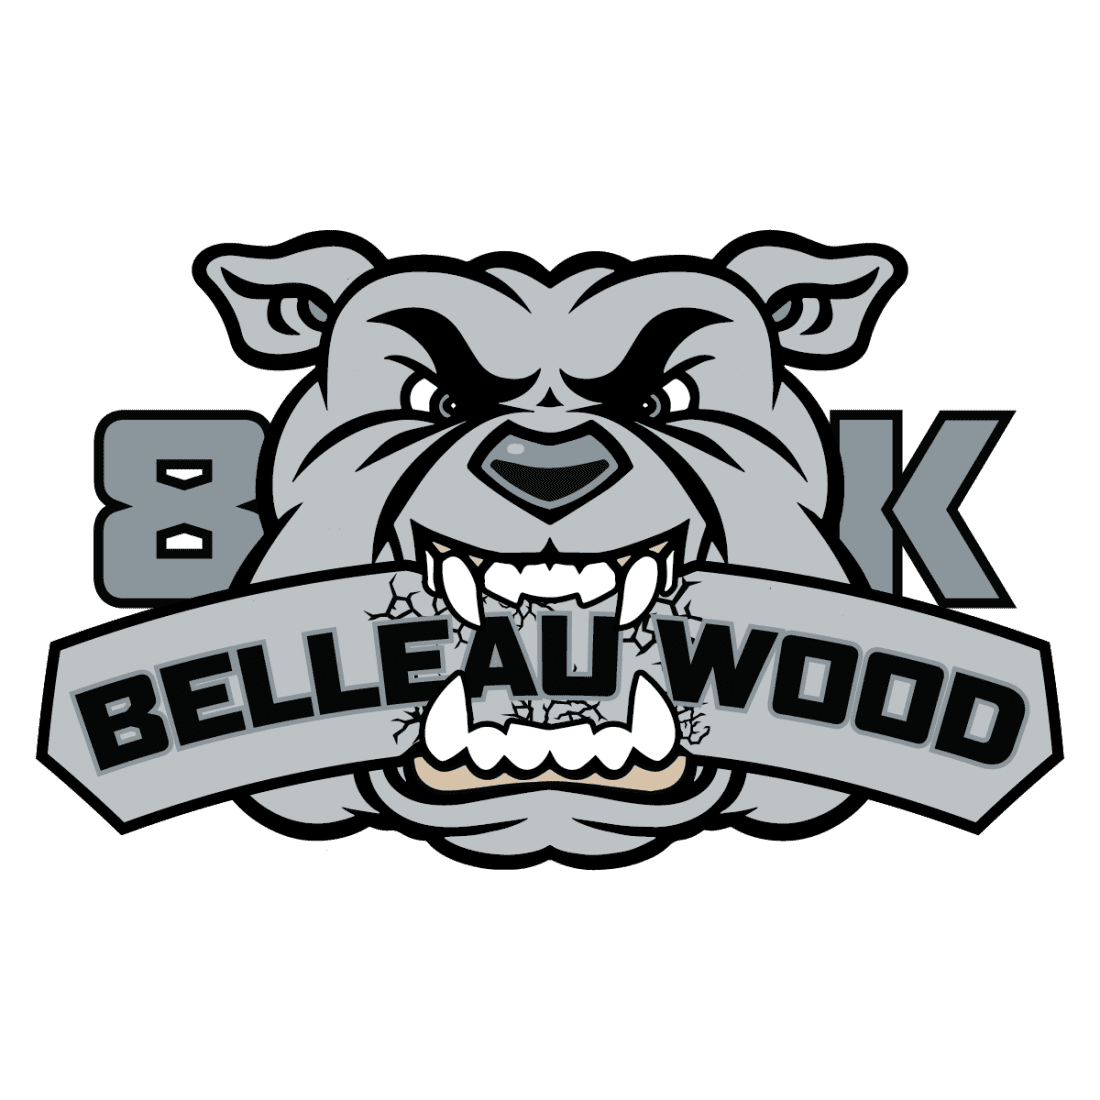 Belleau Wood 8K logo on RaceRaves